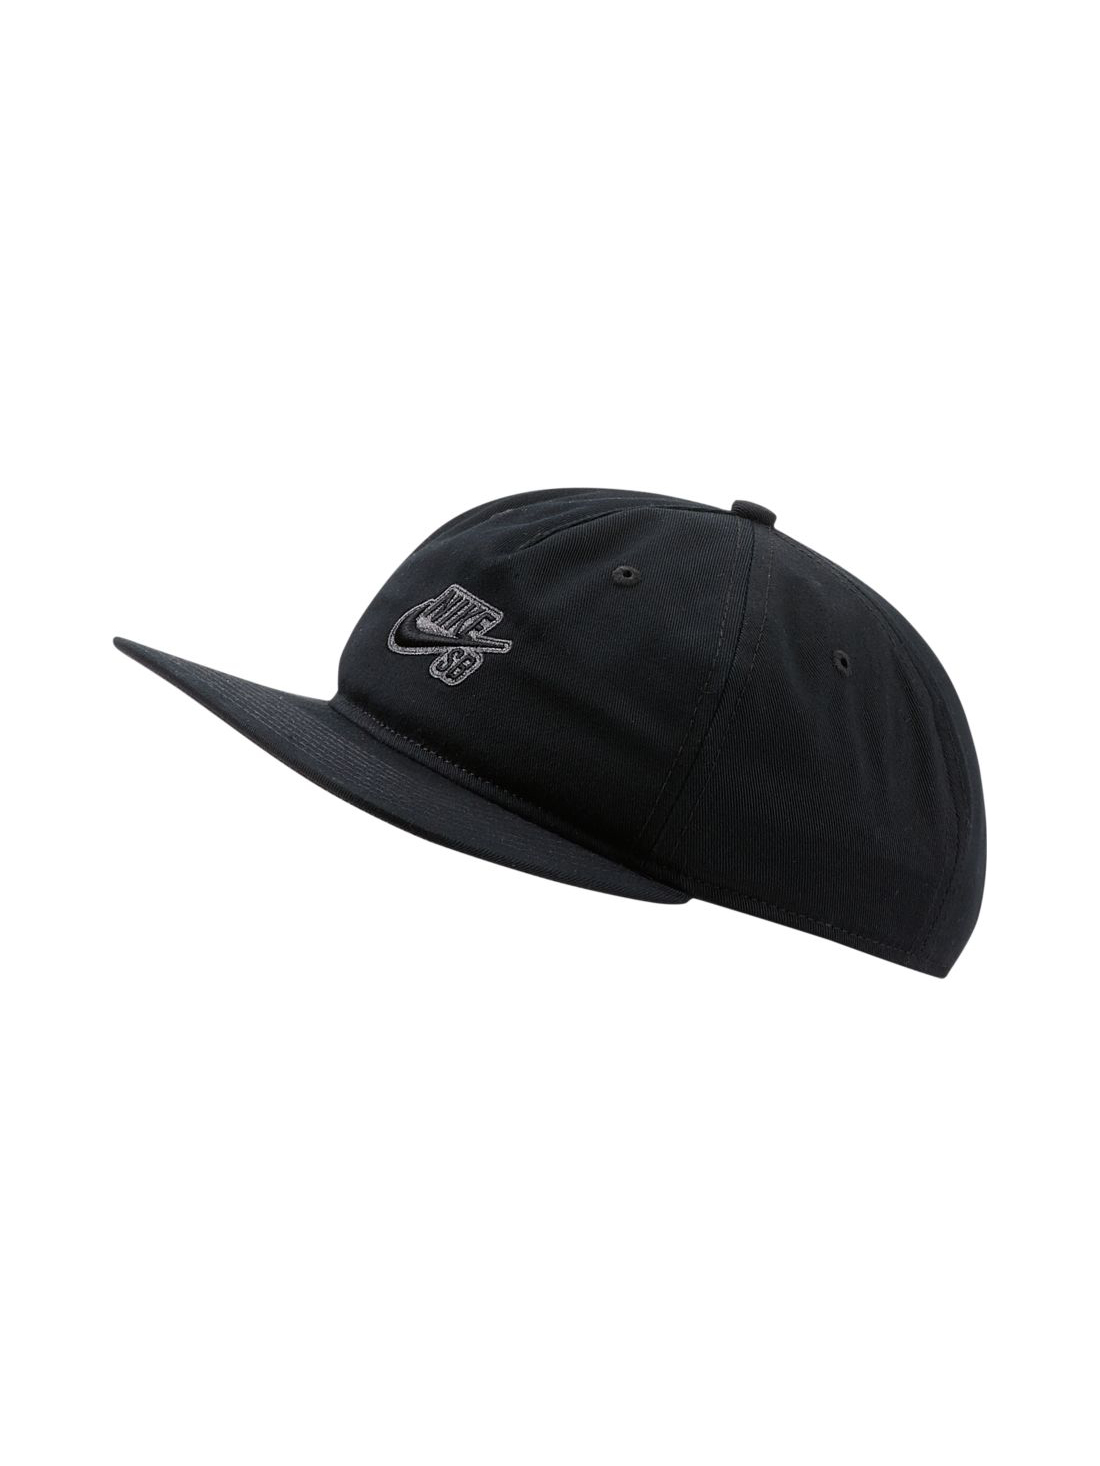 Nike SB Skate Hat - Black / Anthracite 